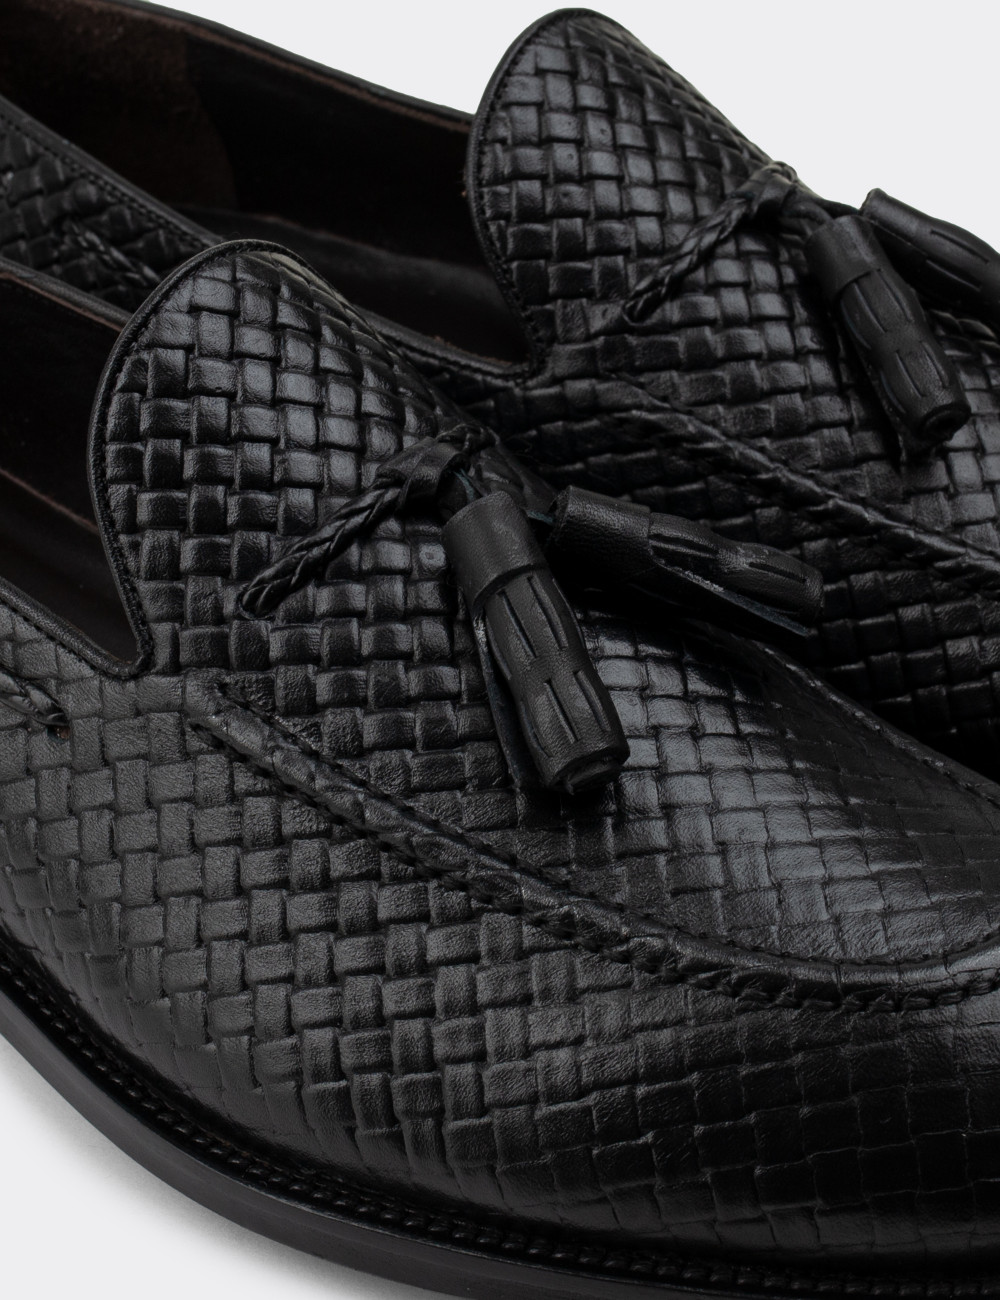 Hakiki Deri Siyah Loafer Erkek Ayakkabı - 01642MSYHM02